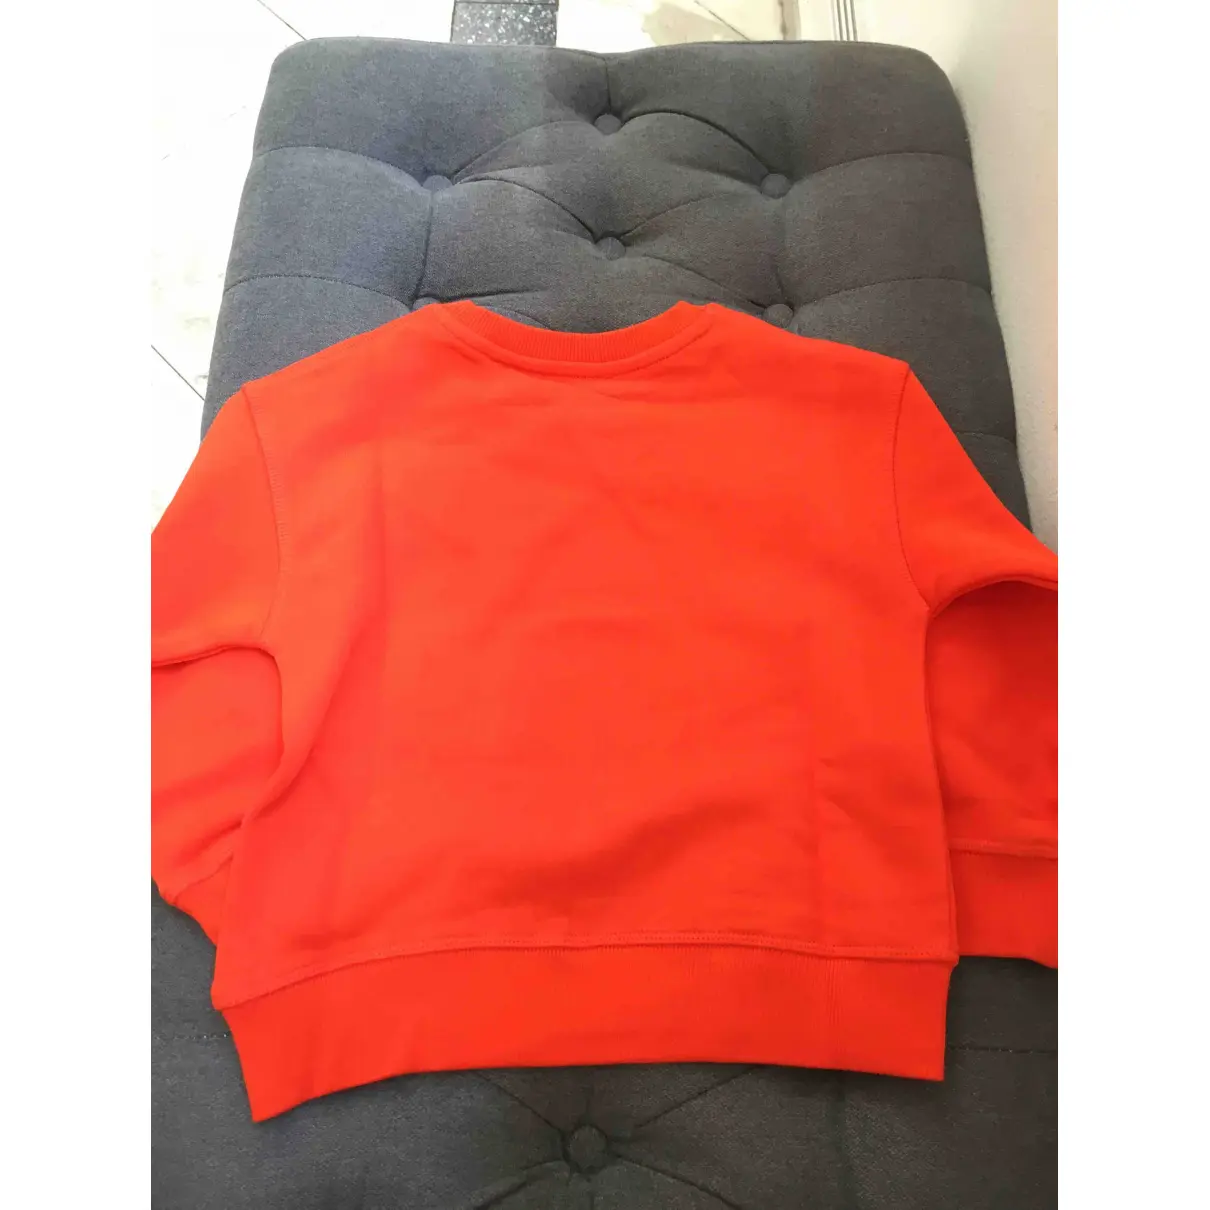 Buy Kenzo Orange Cotton Knitwear Tiger online